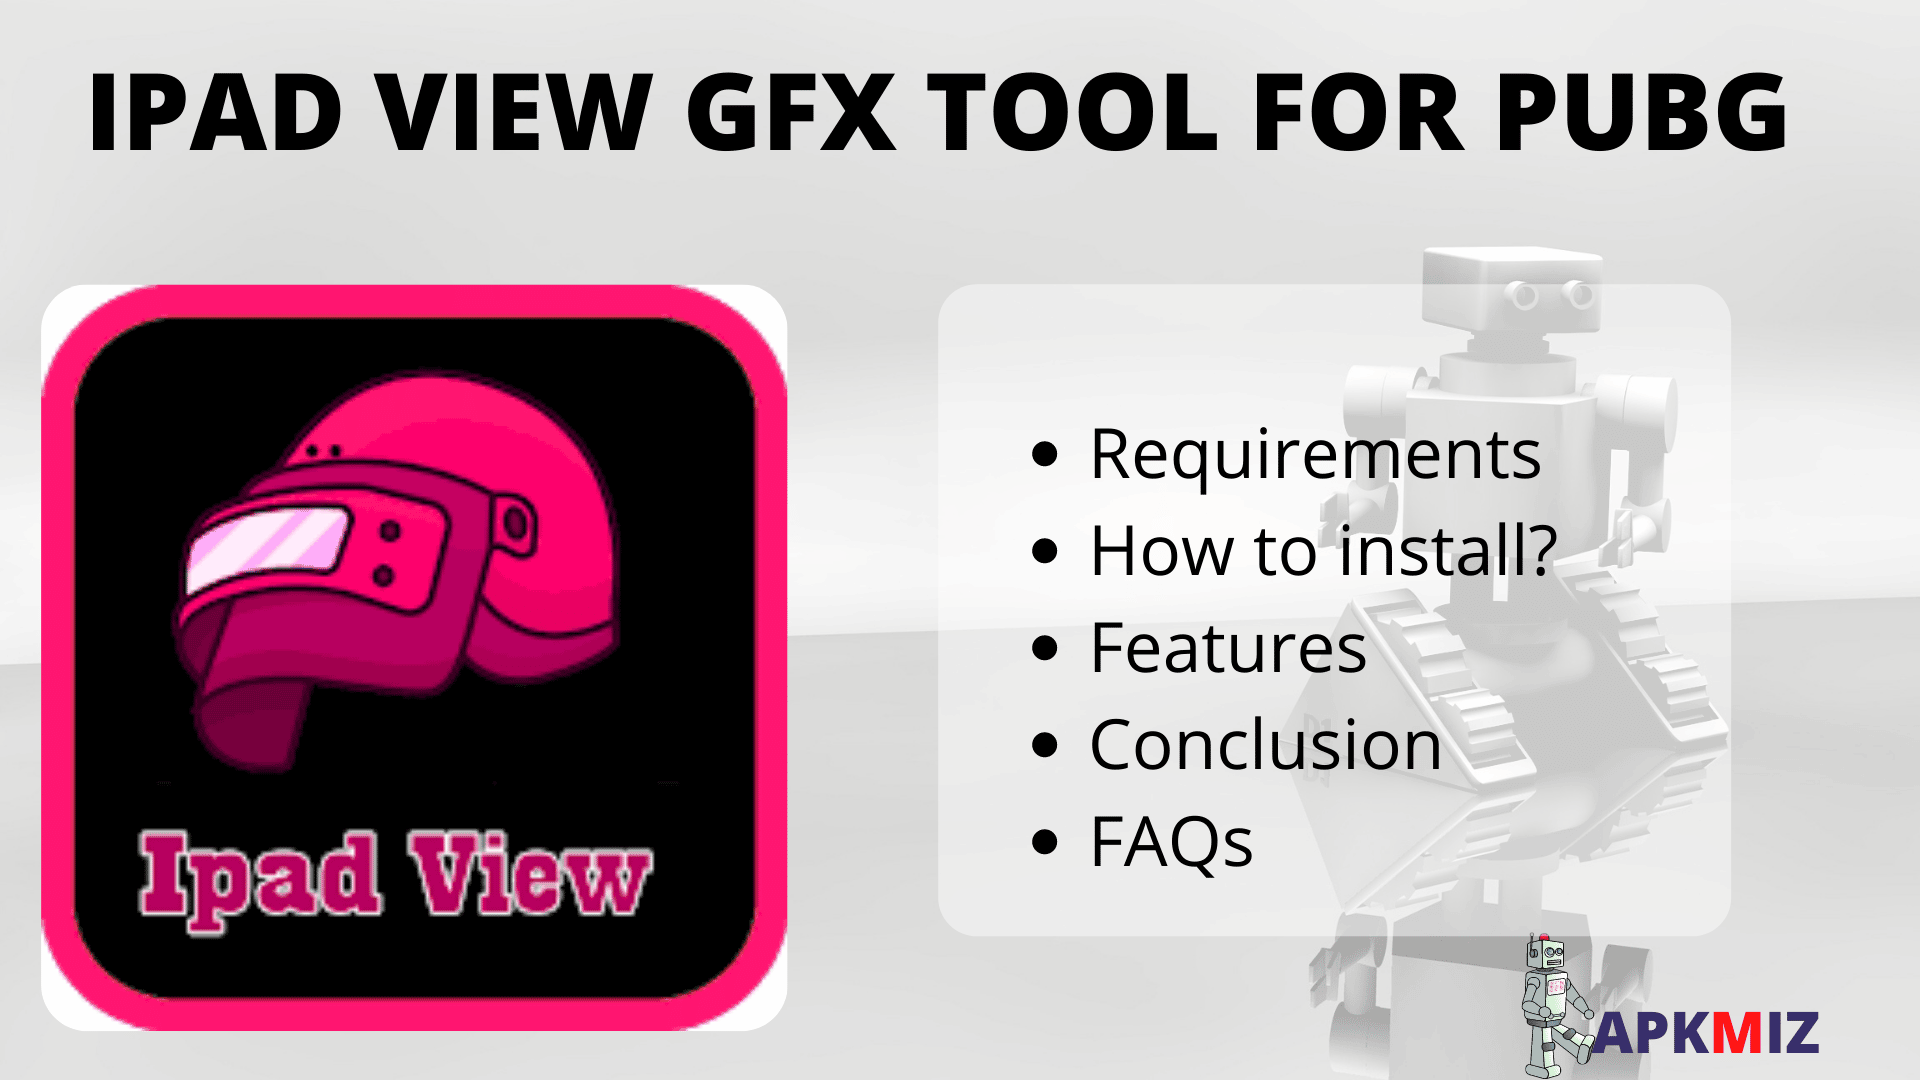 ipad view gfx tool for pubg